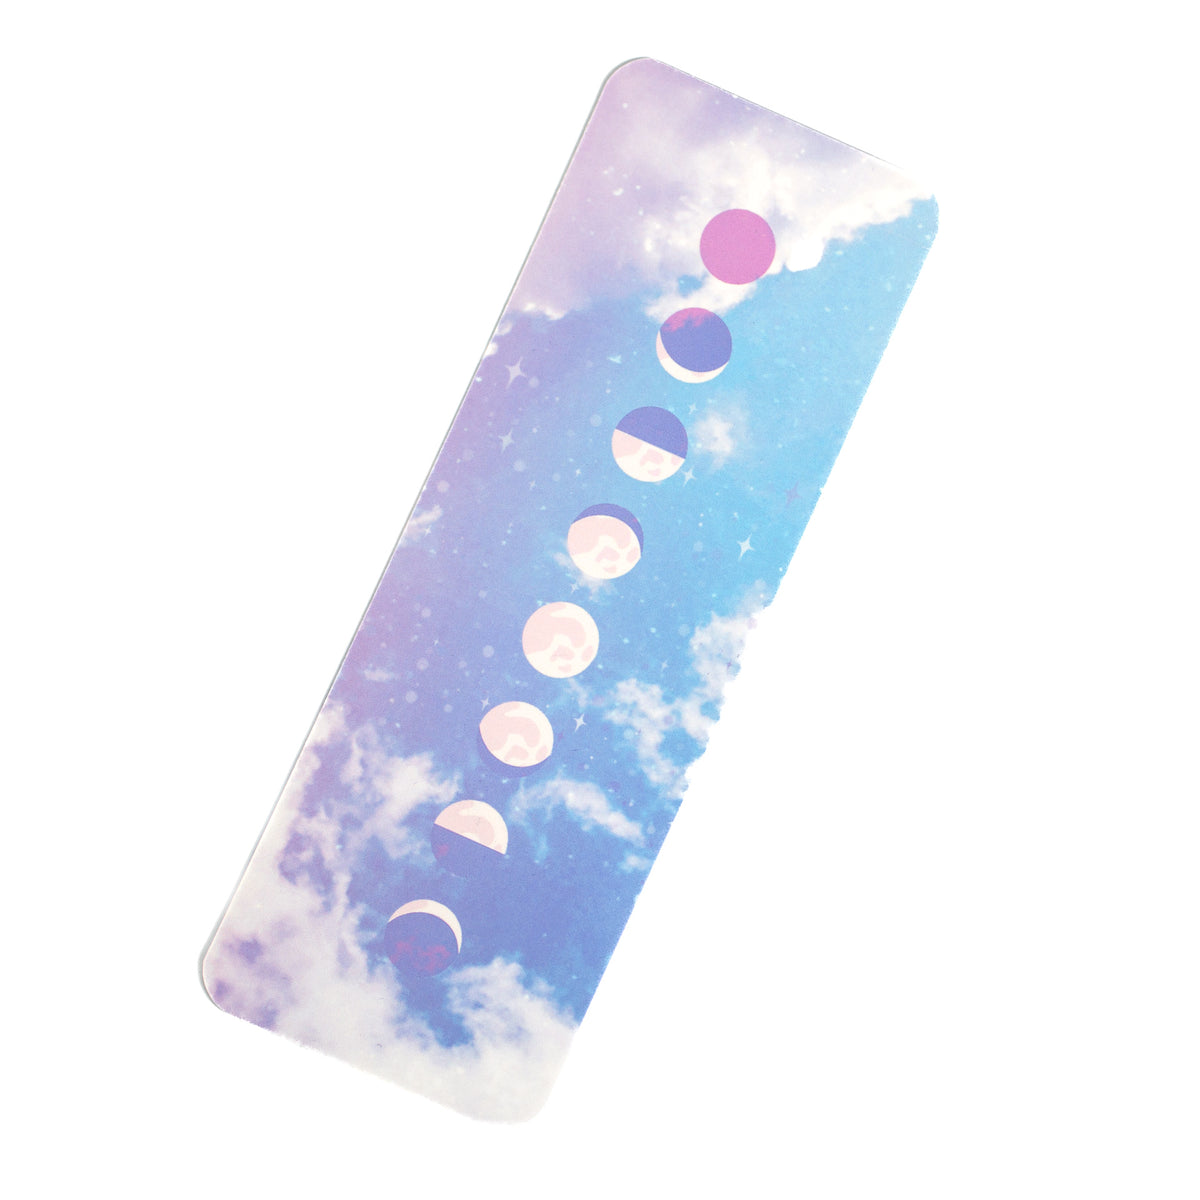 Pastel moon phase bookmark